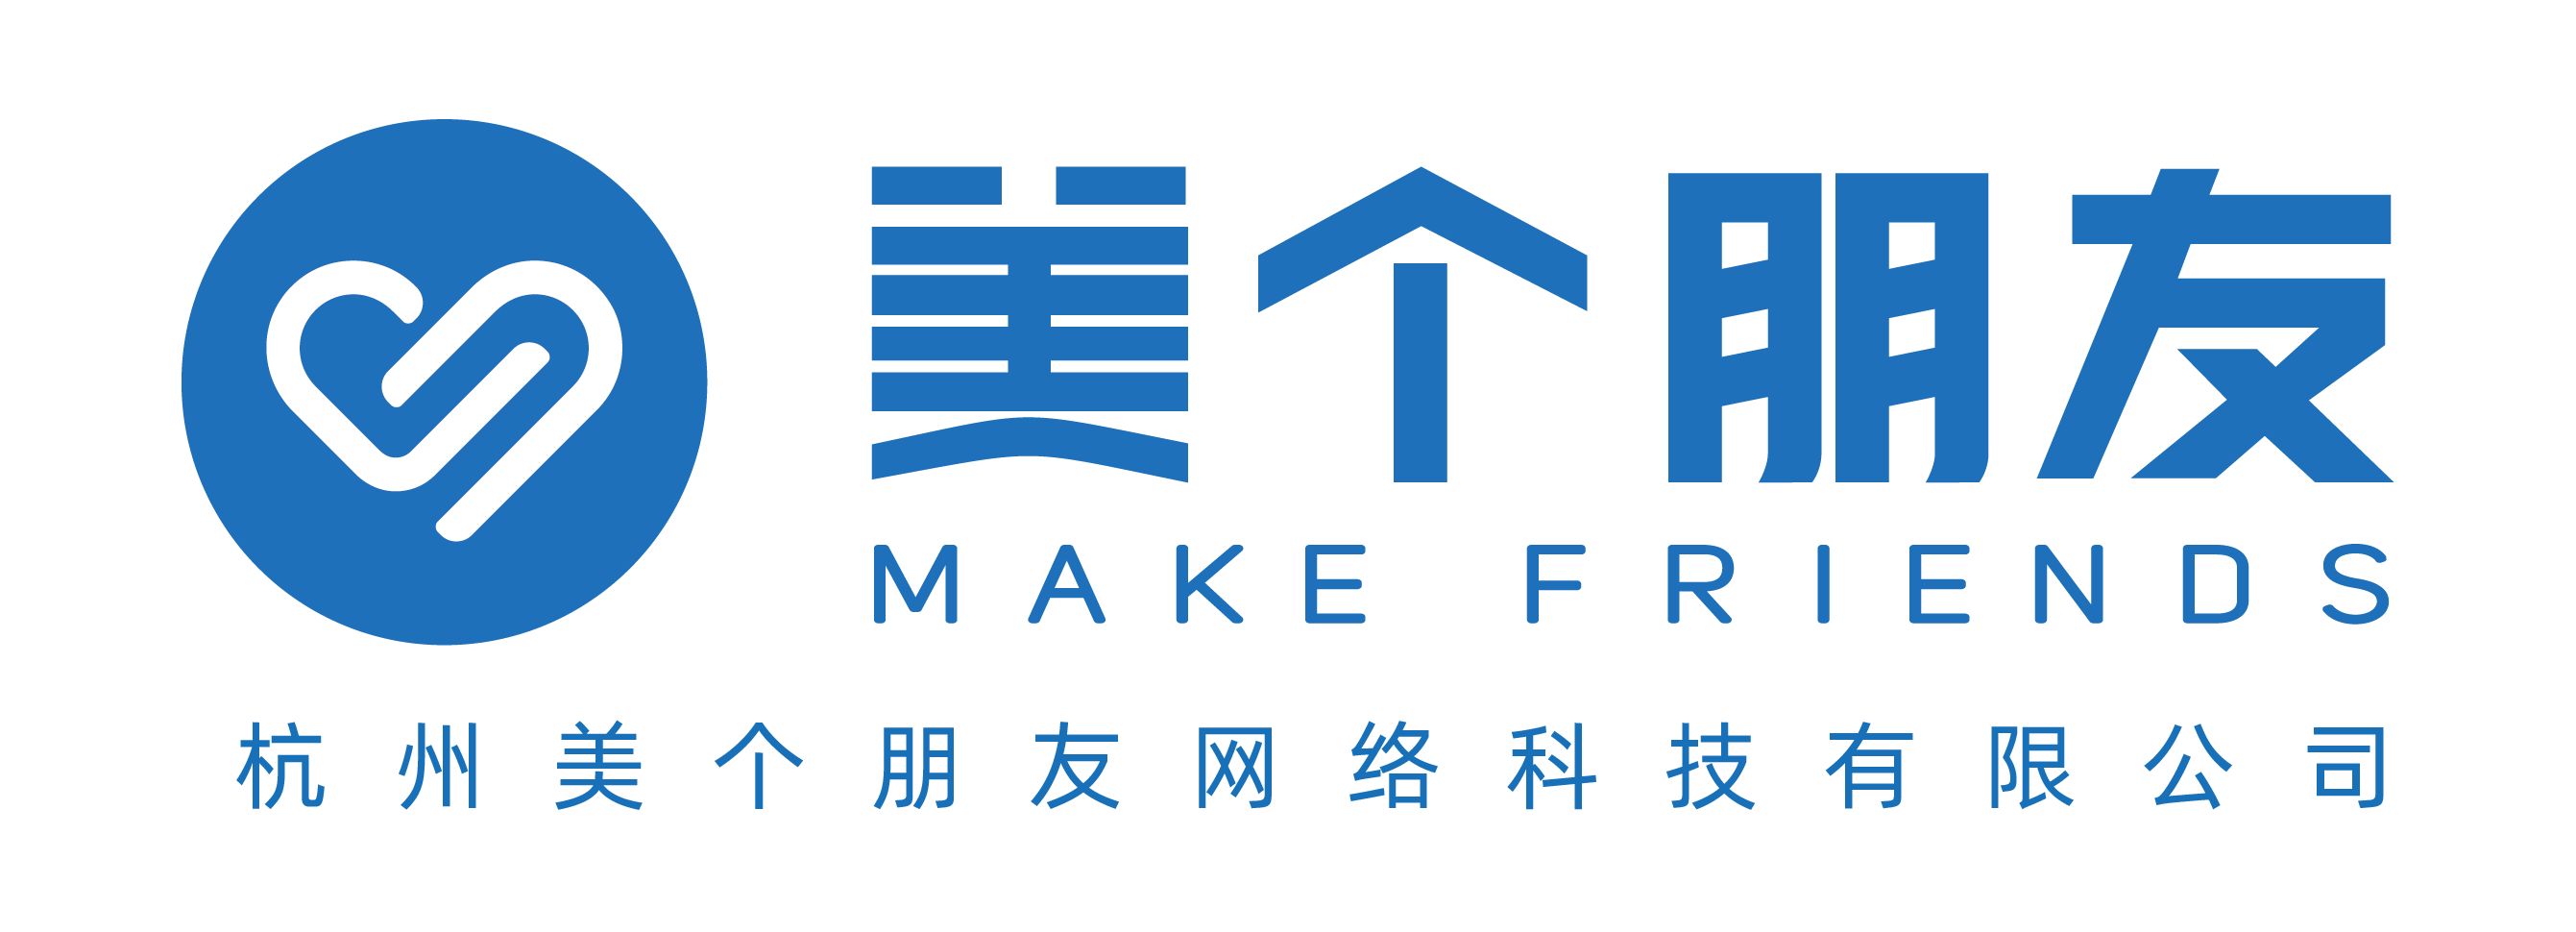 Make friends Logo